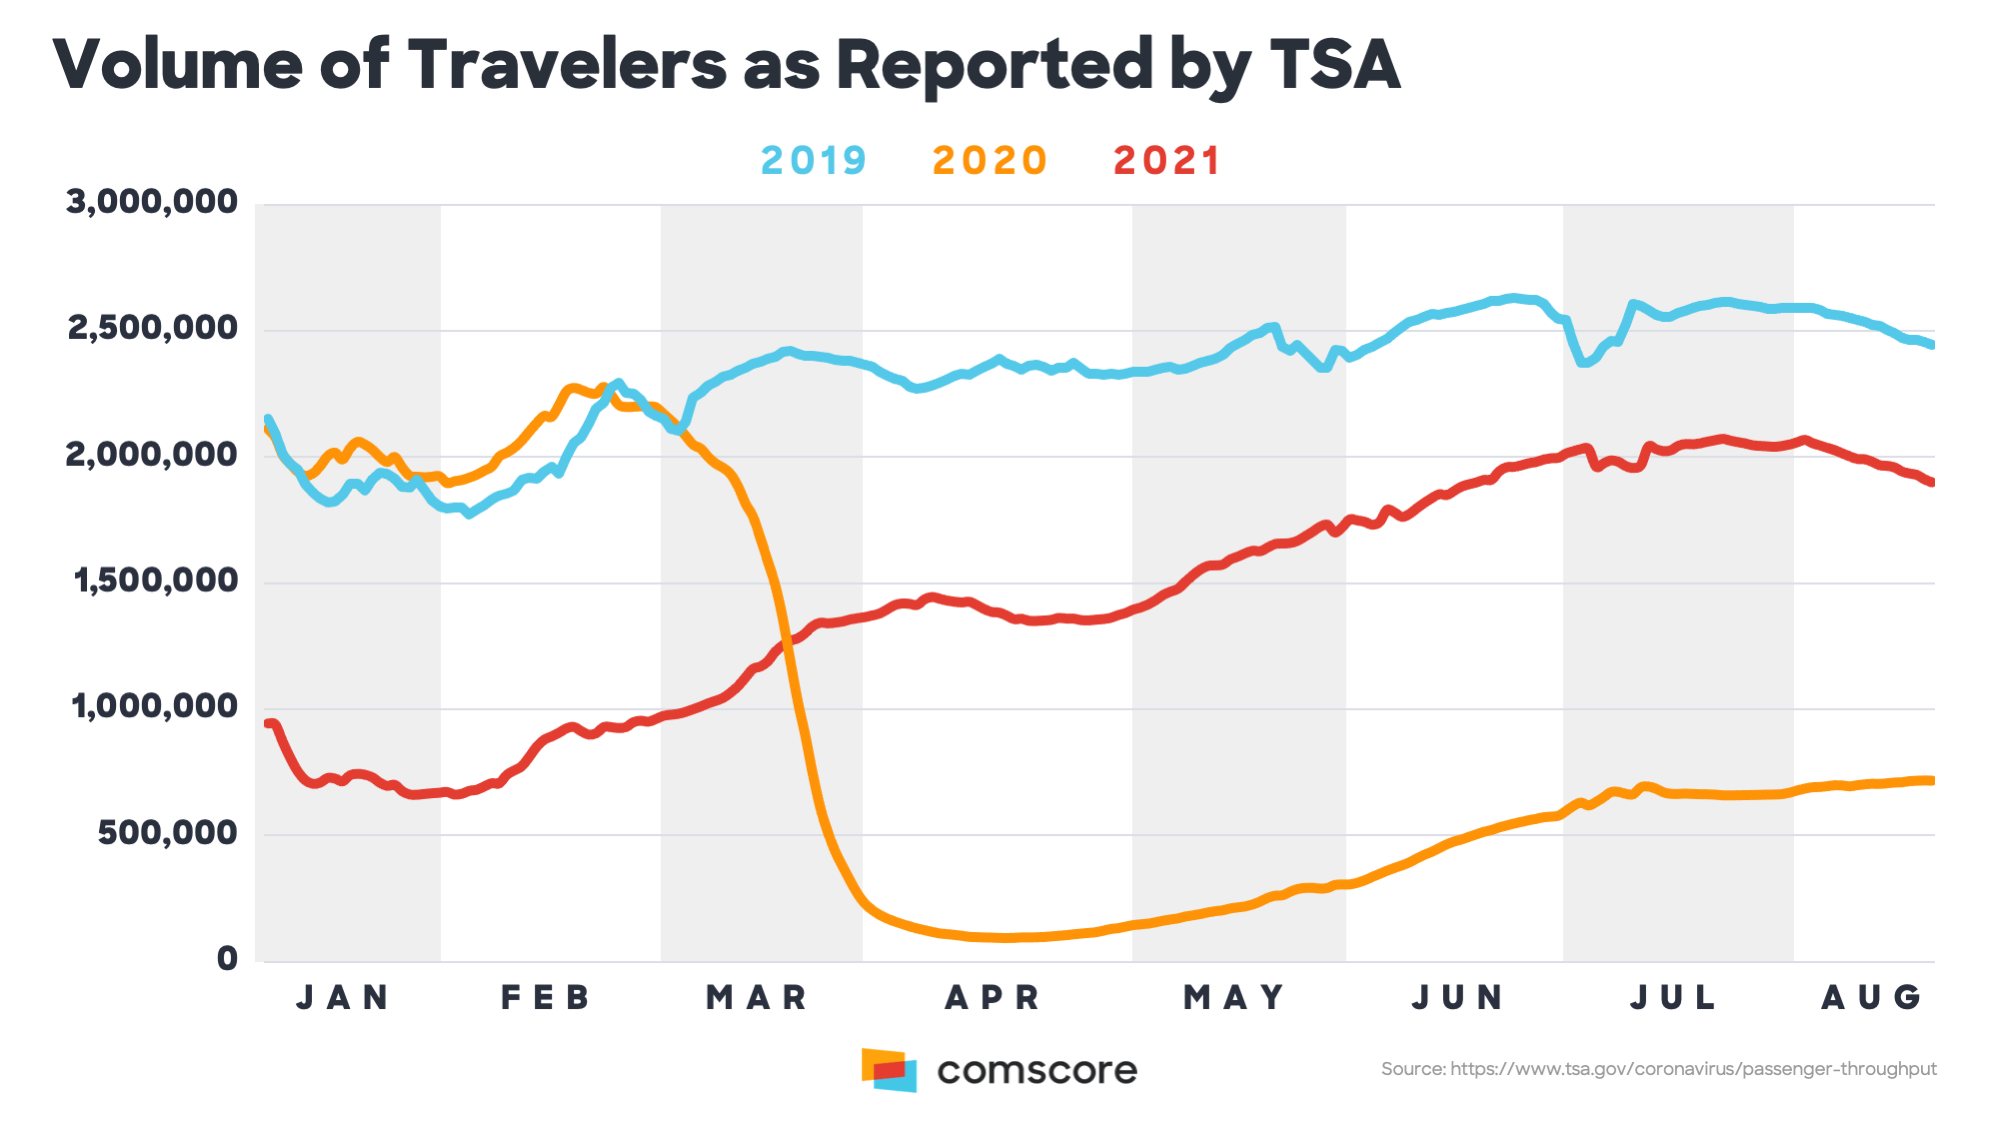 Volume of Travelers 2019 - 2021